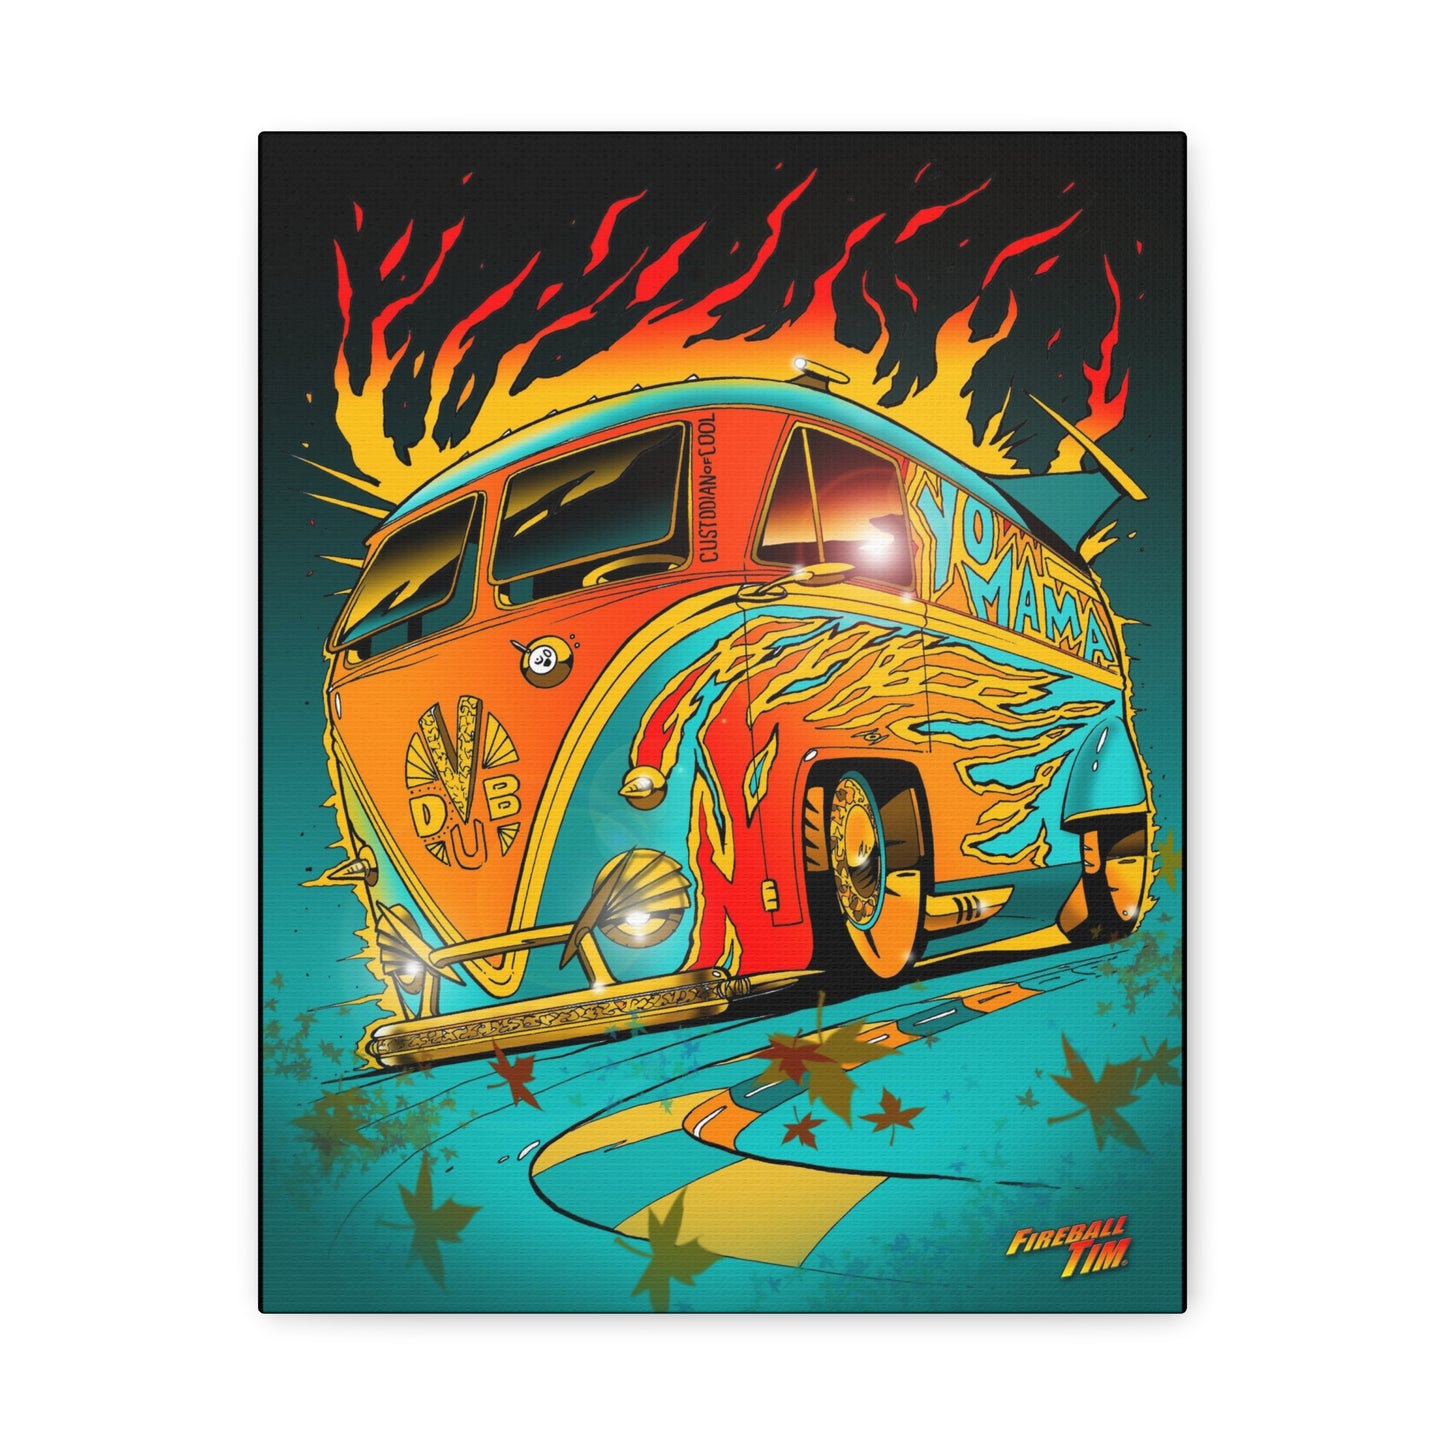 Fireball Tim KUSTOM VBUS Signature Series Canvas Gallery Art Print, Bus, Kustom Car, Custom Car, Kustom Bus, Hot Rod, Kustom Kulture